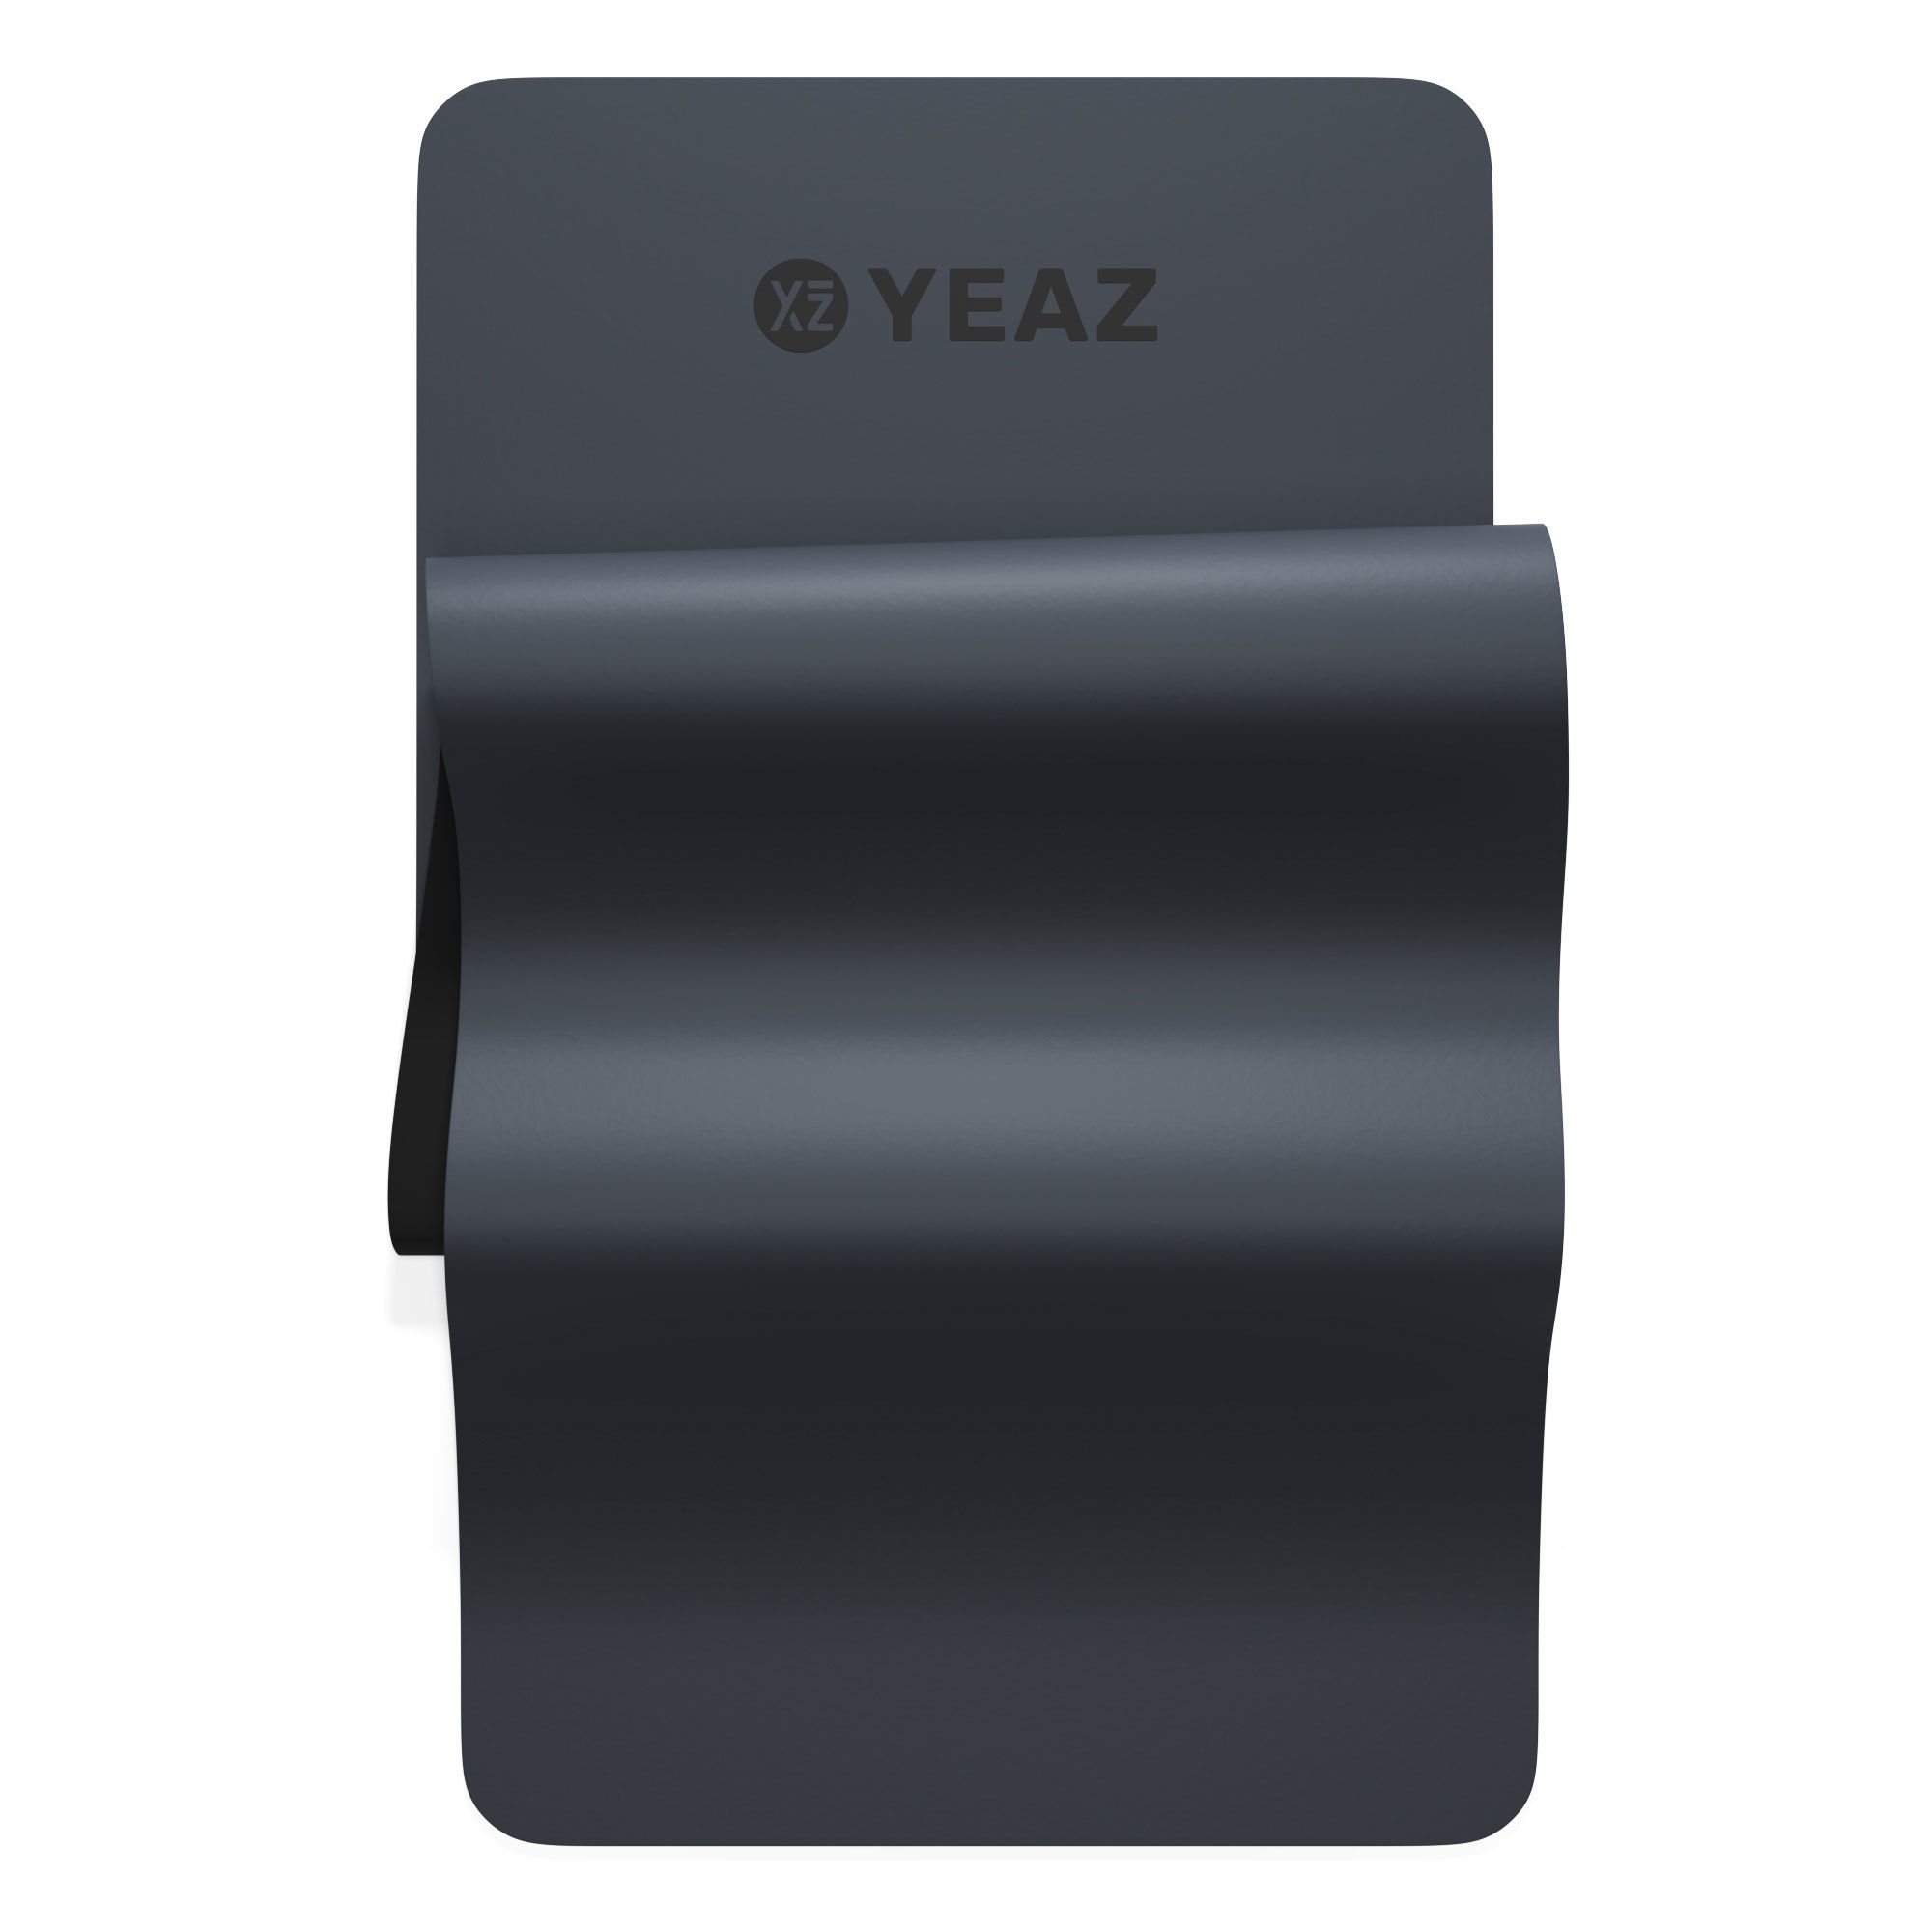 YEAZ MOVE UP Set - Yogaband & Yogamatte